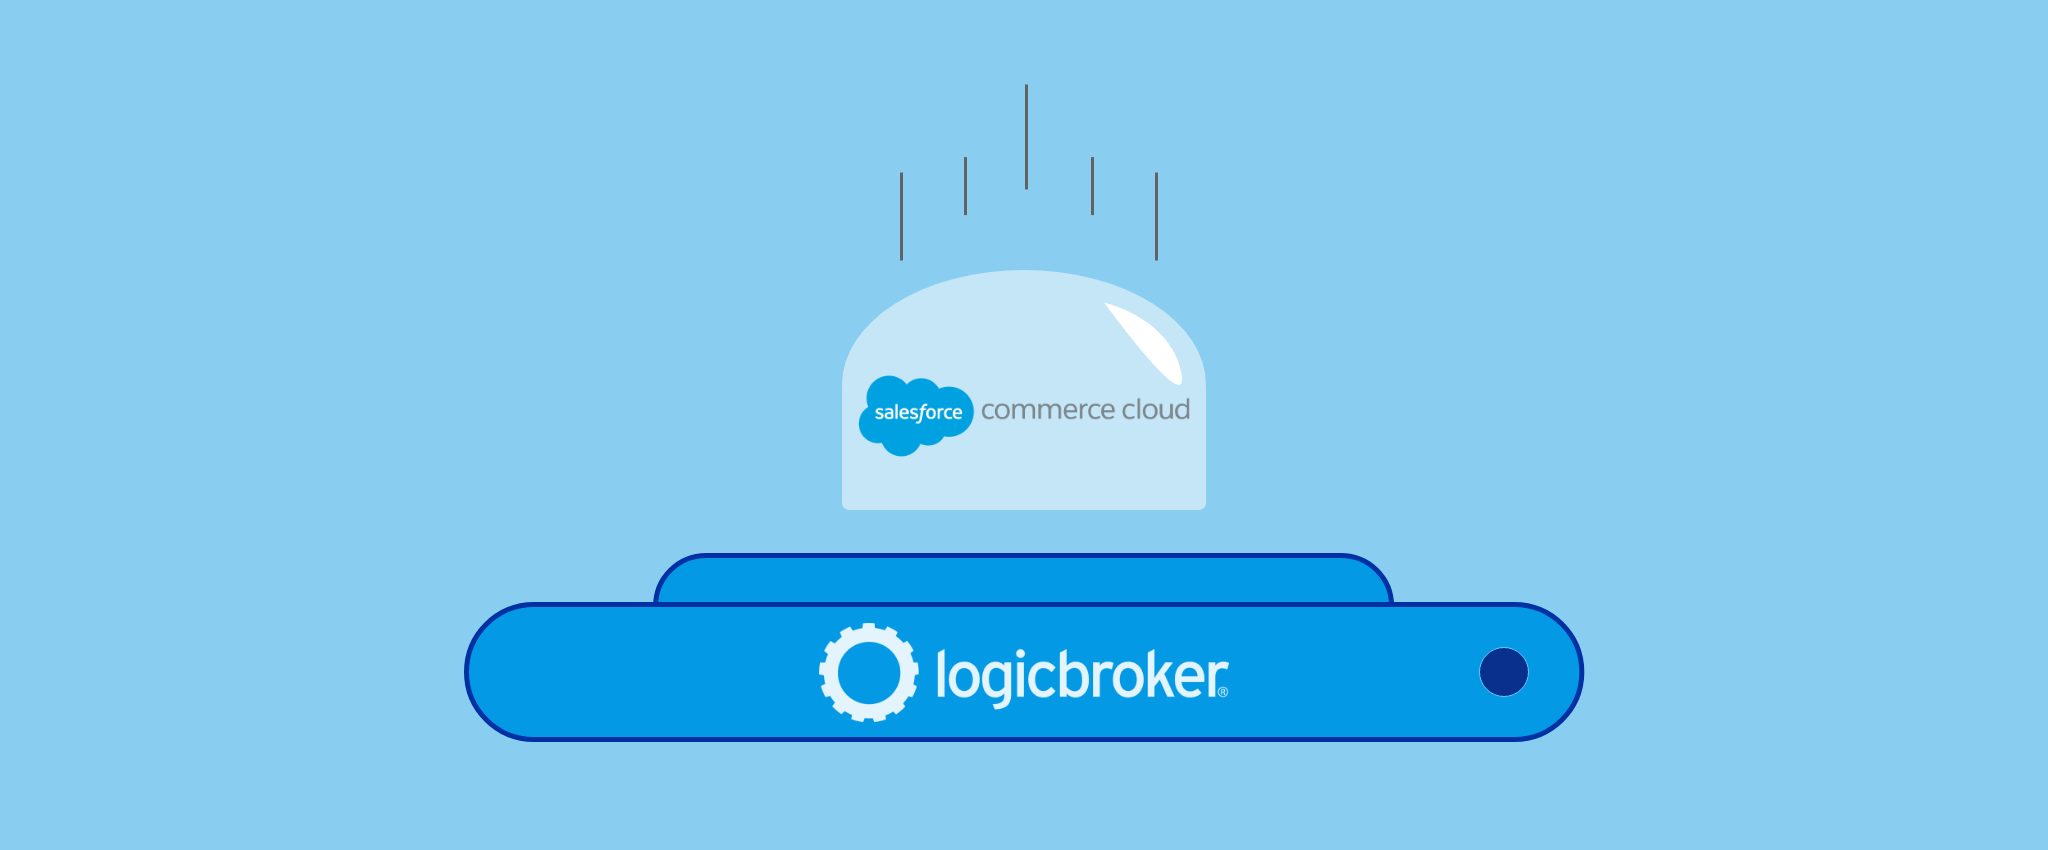 Salesforce Commerce Cloud graphic - Logicbroker